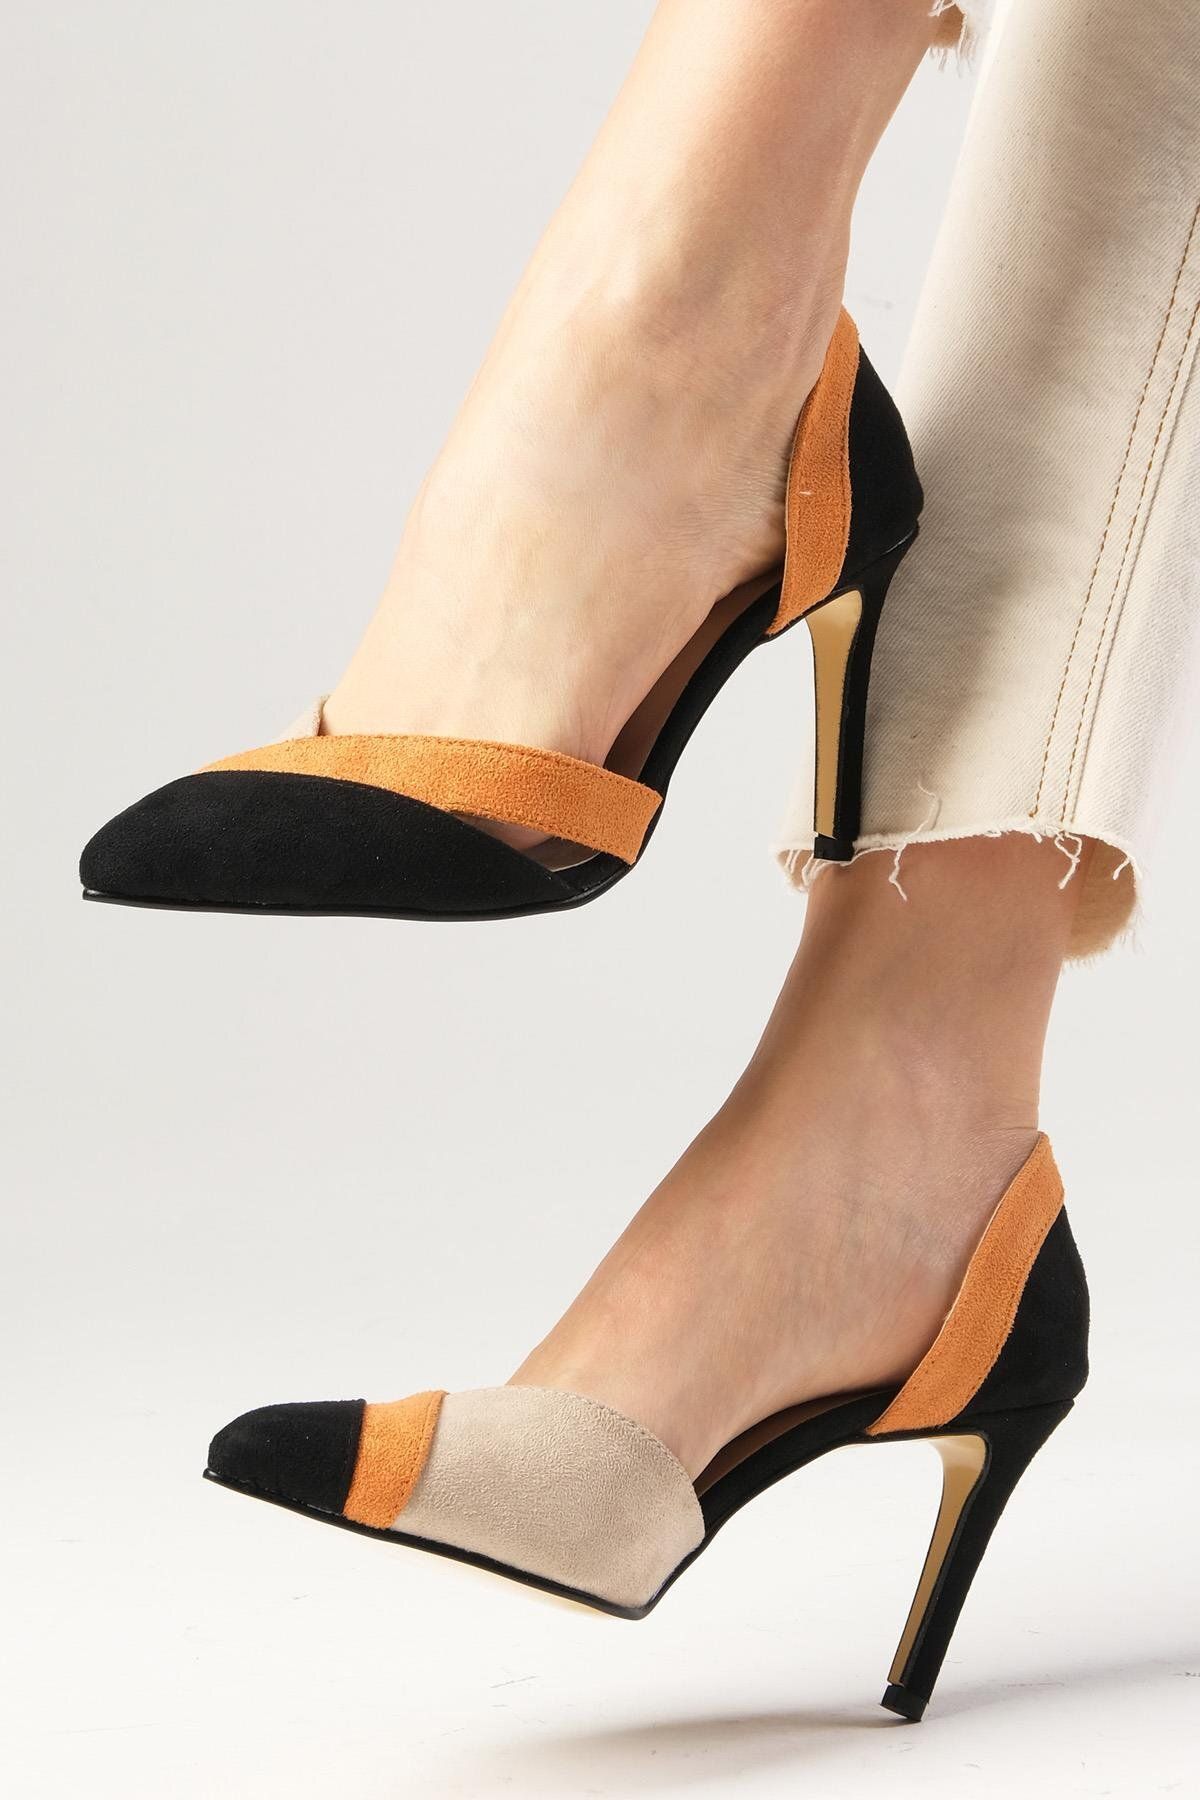 Mio Gusto Anita Siyah Renk Süet Renk Bloklu Kadın Stiletto Topuklu Ayakkabı